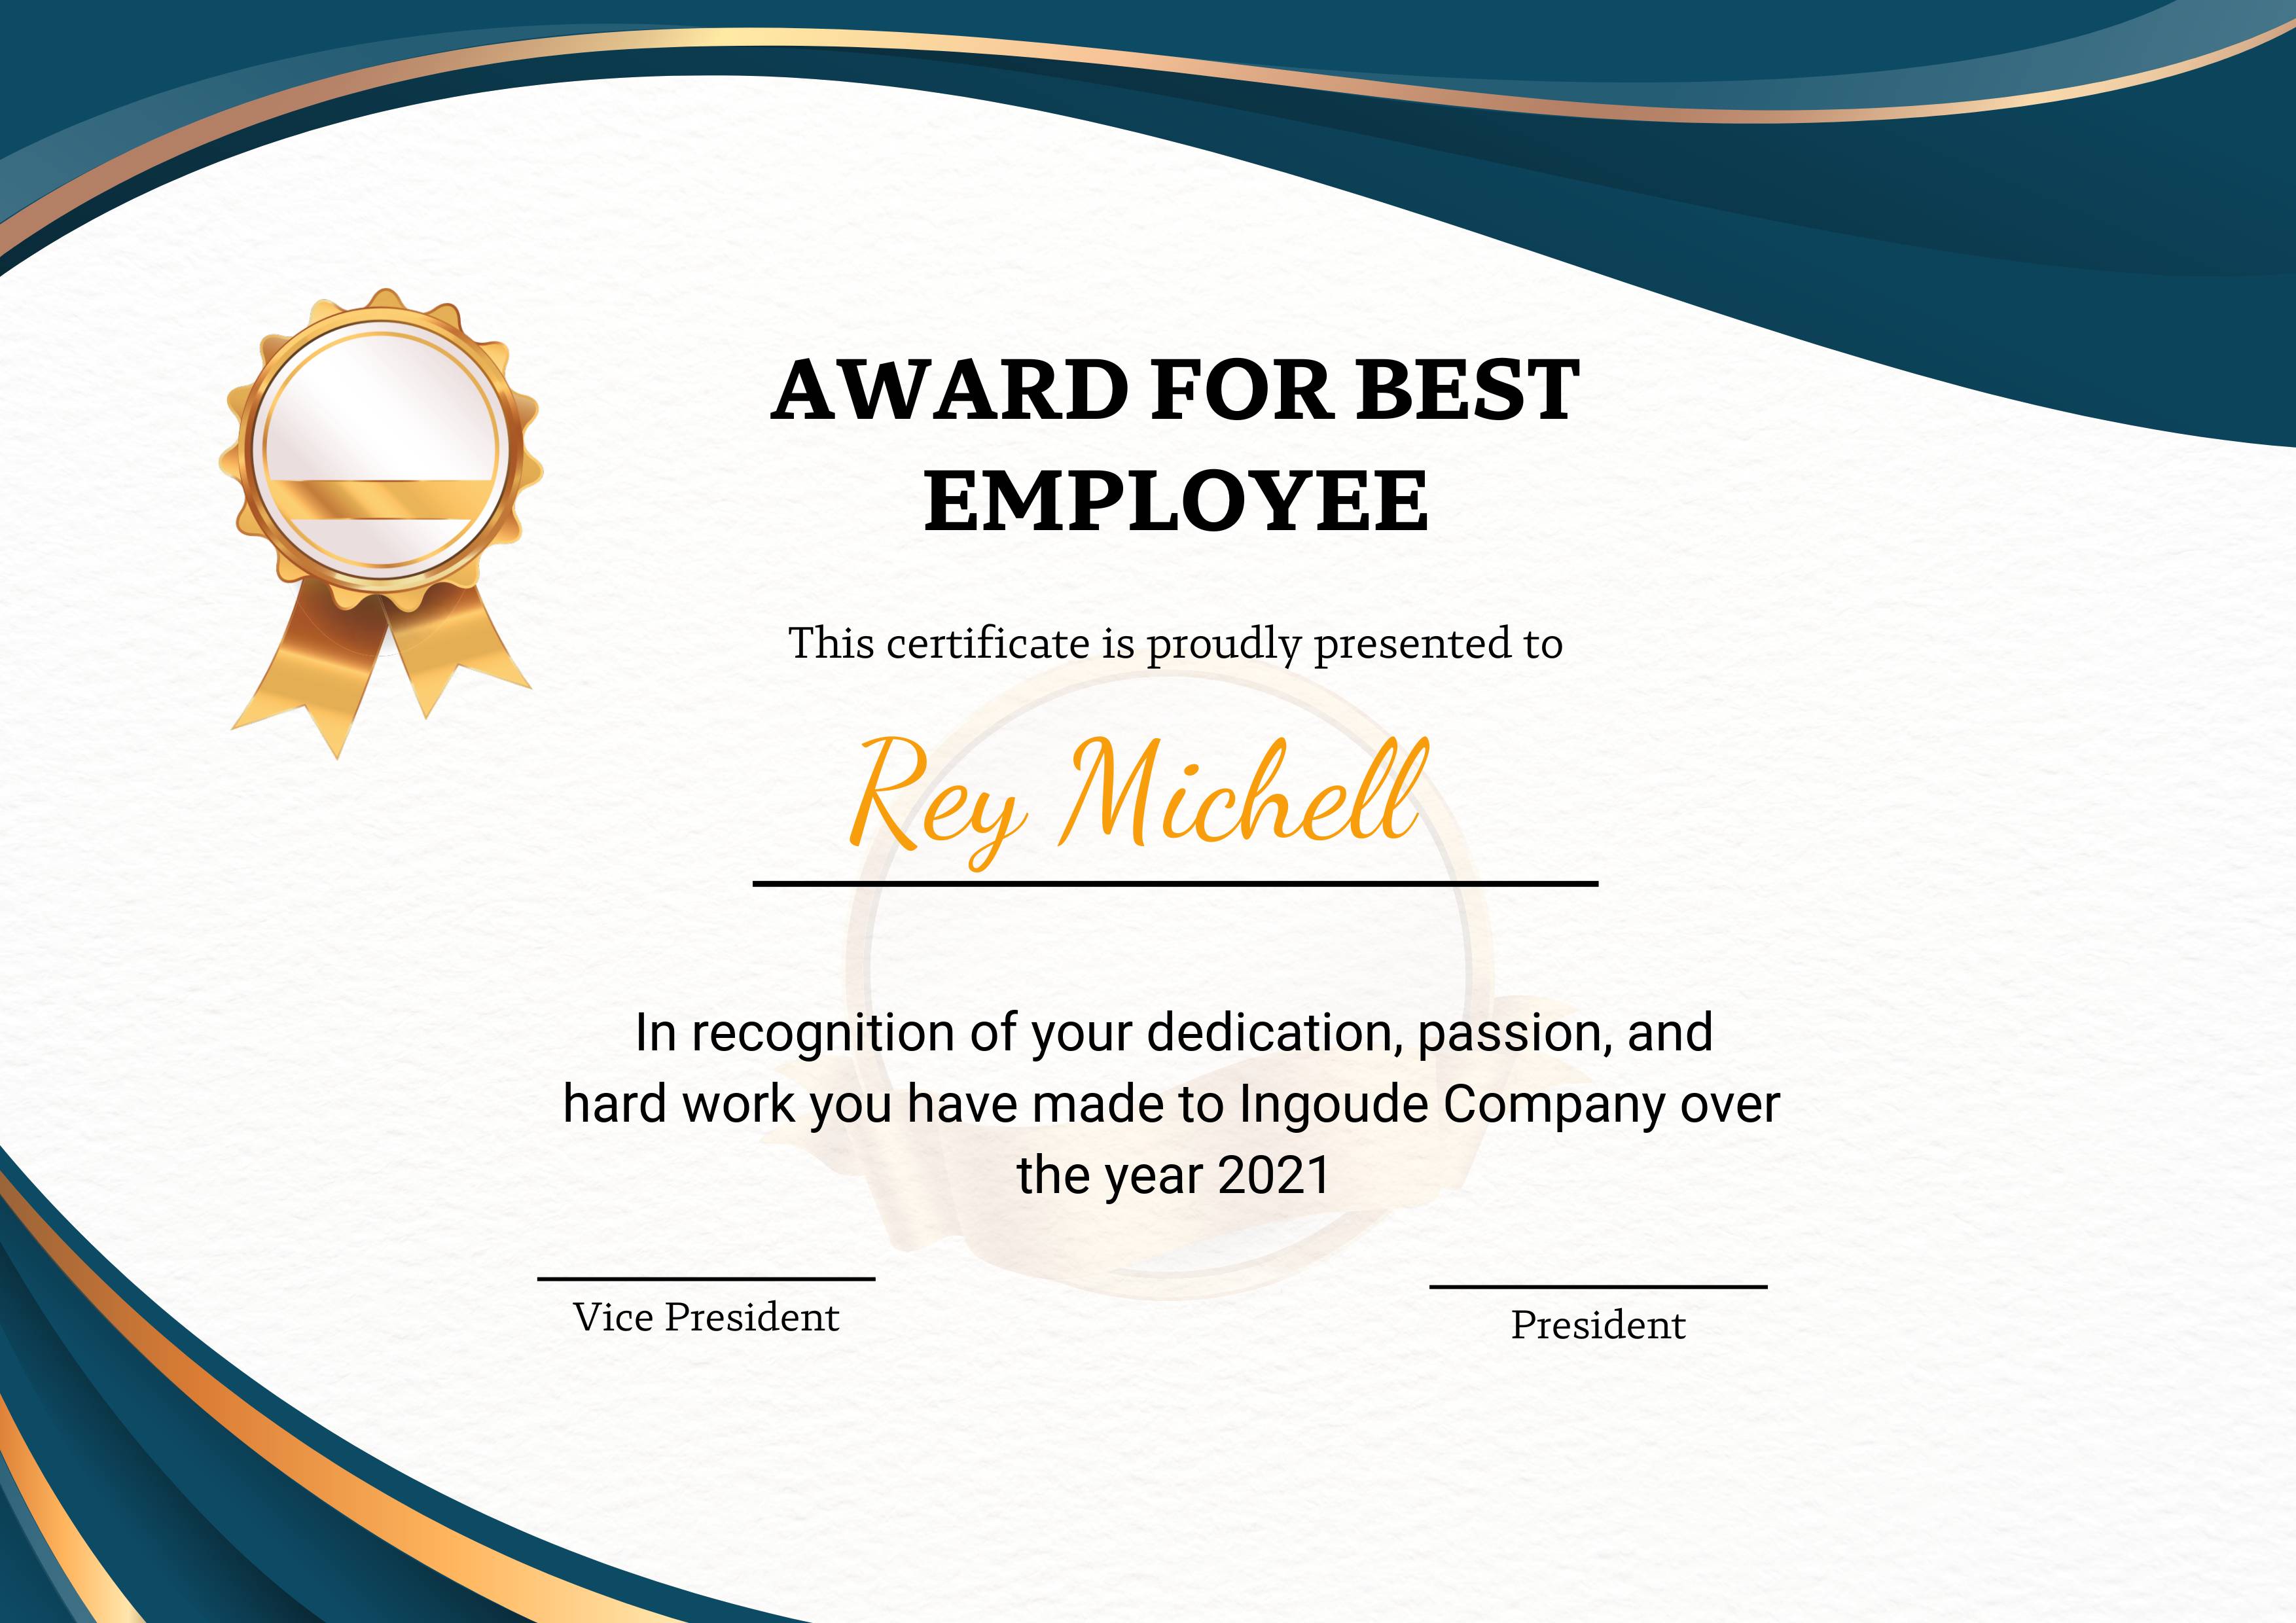 picnie-create-best-employee-award-certificate-image-online